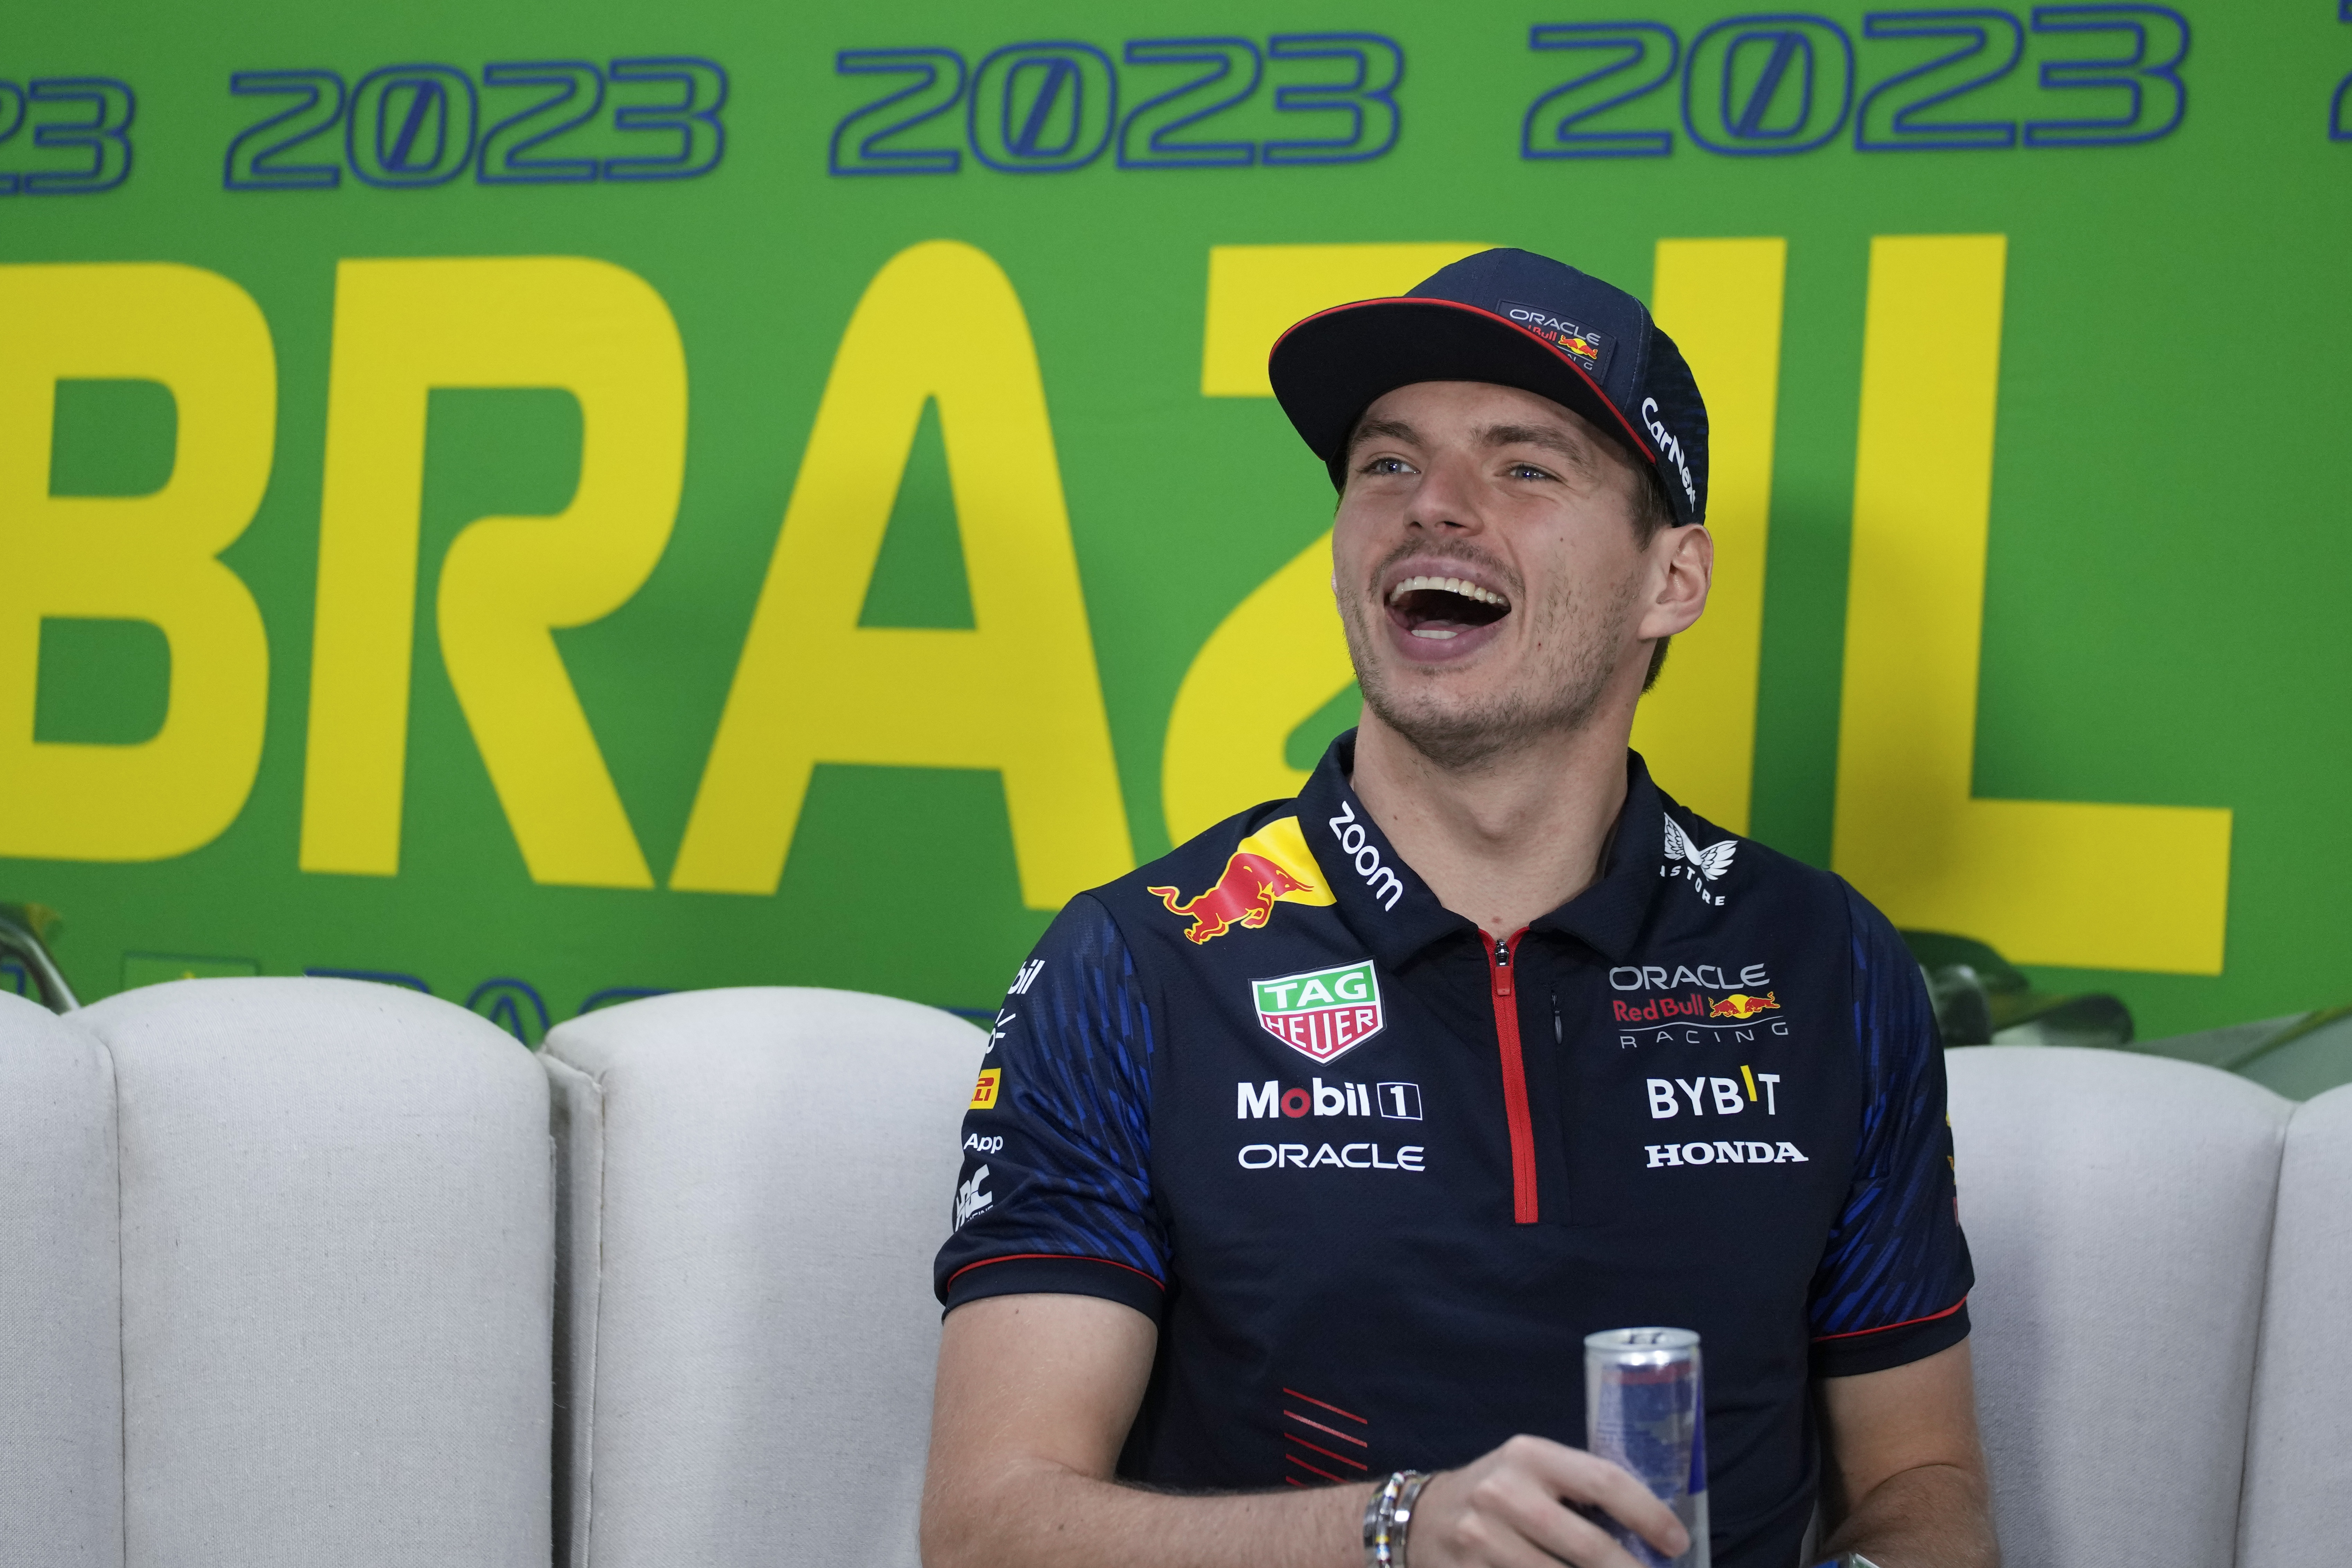 Brazilian Formula 1 2023 (Sao Paulo, Brazil) — Grand Prix Experience